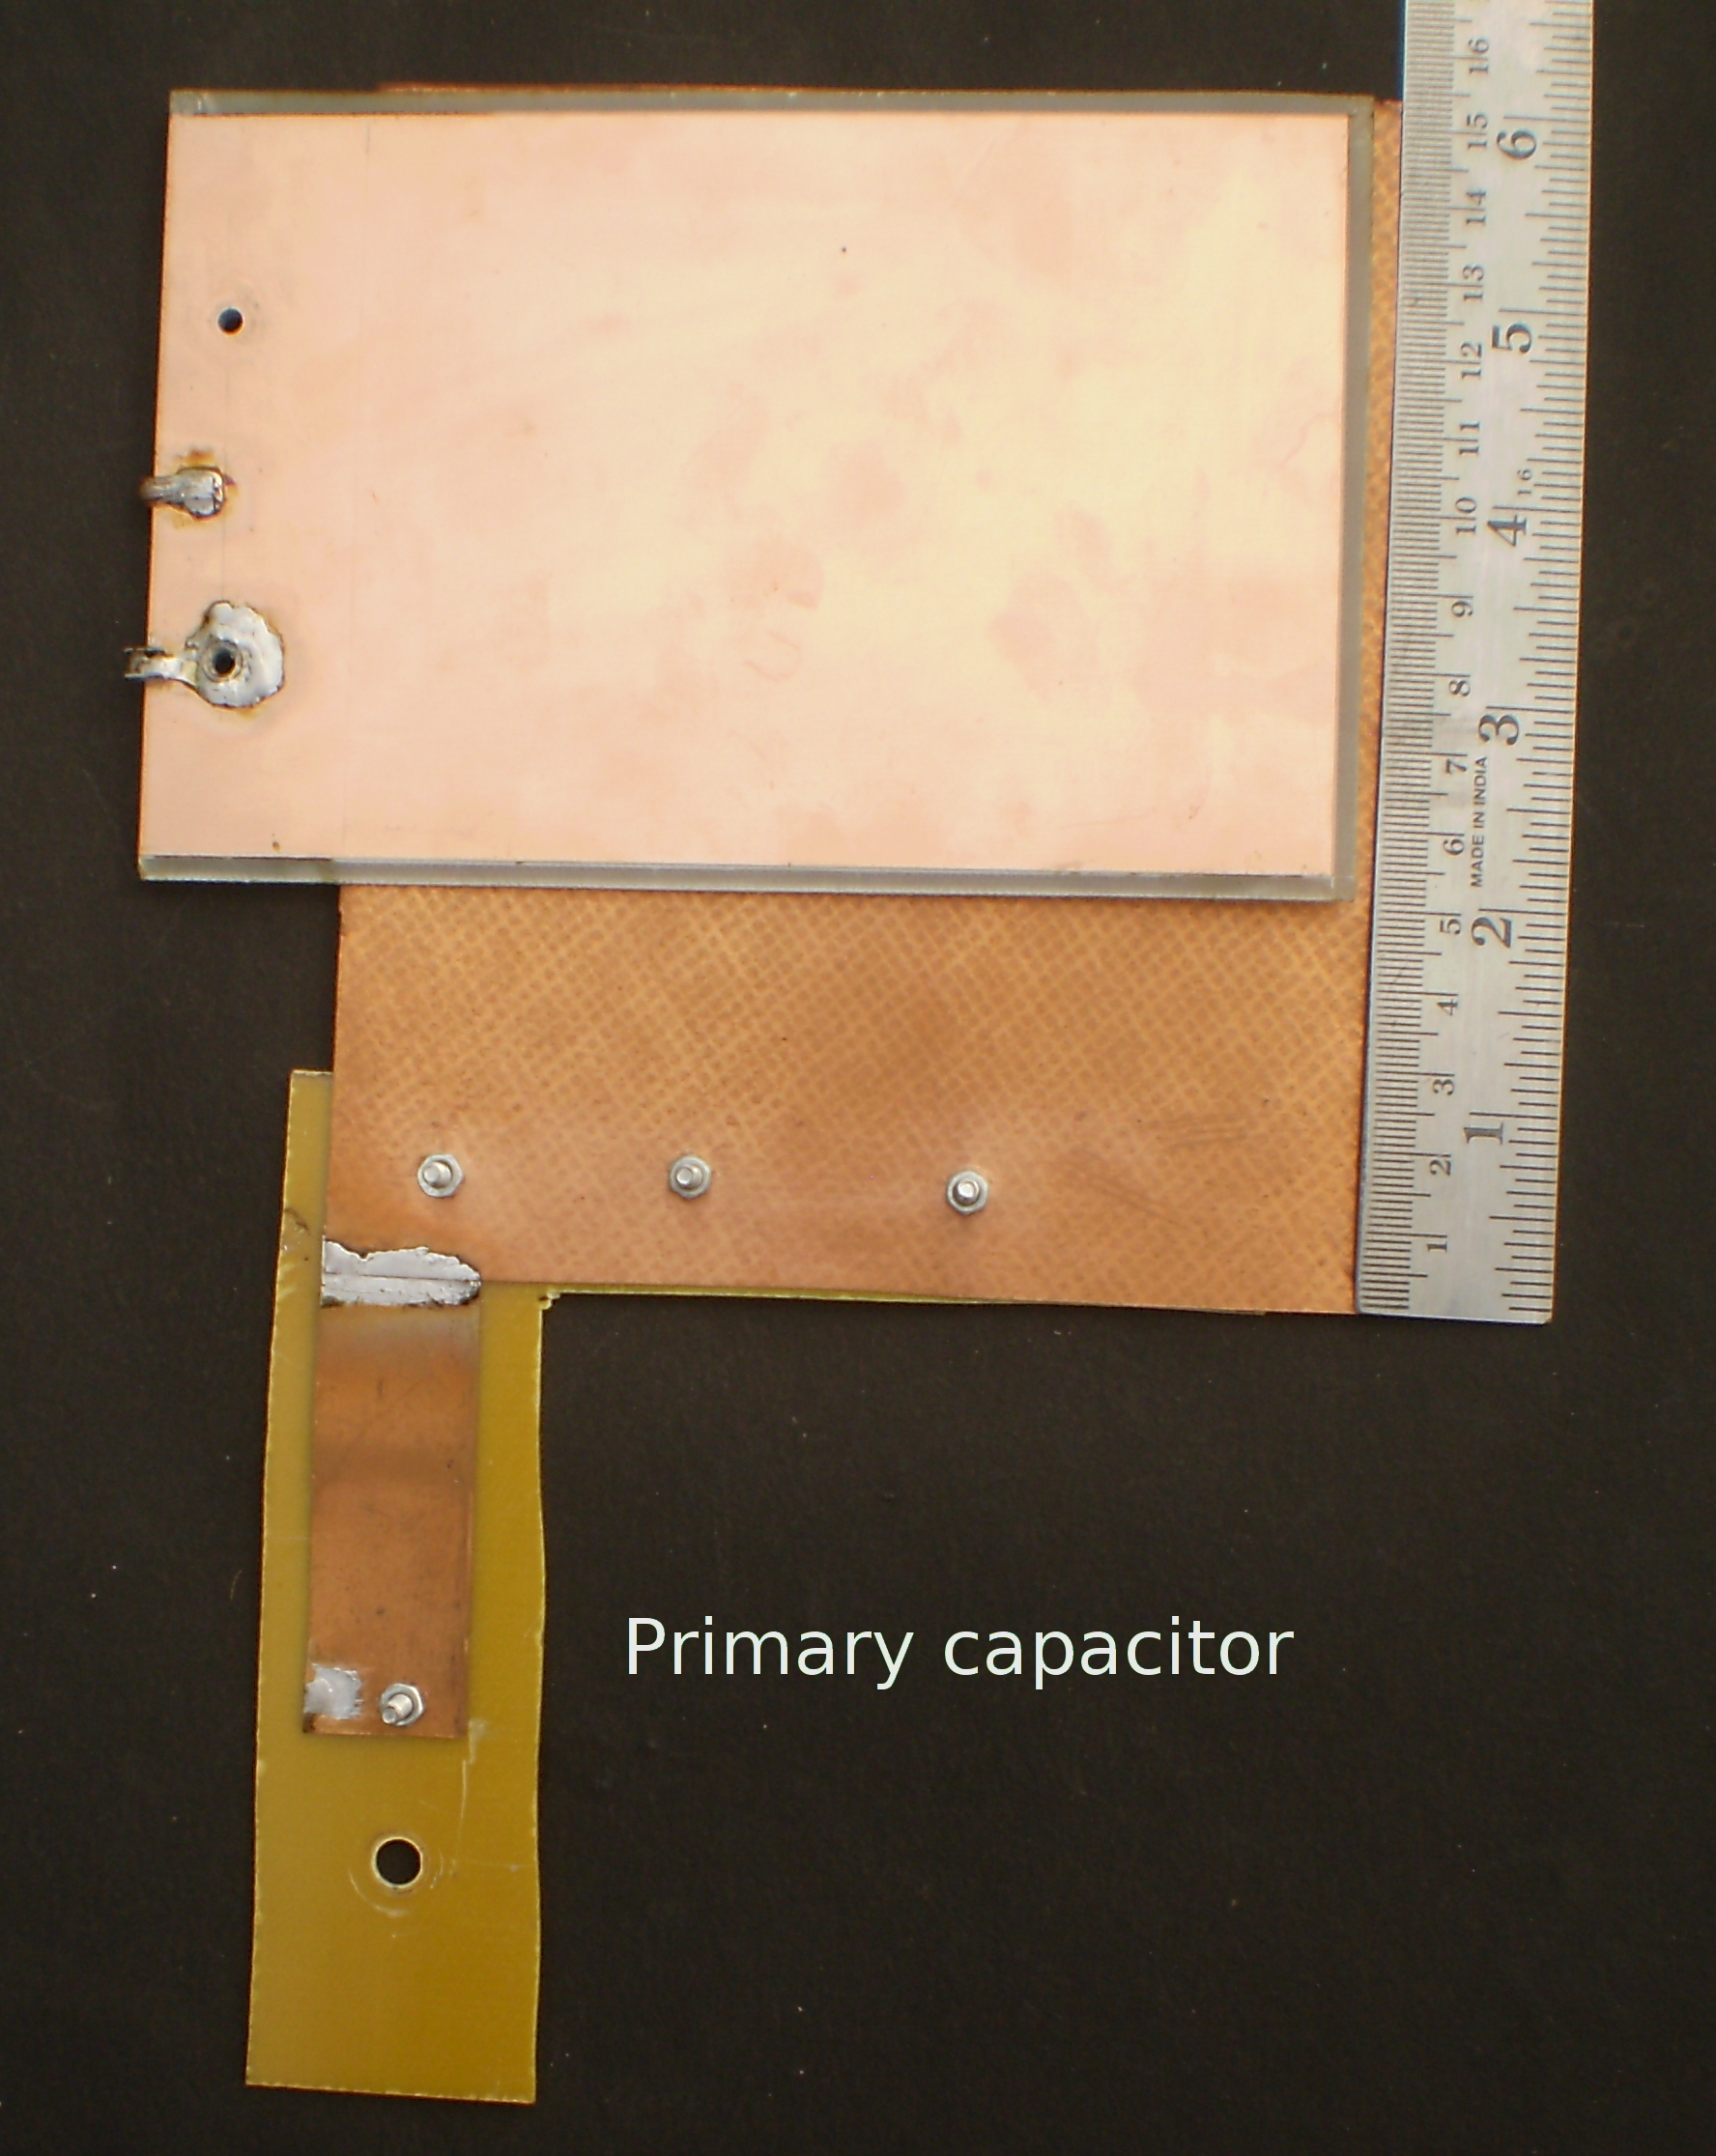 Primary capacitor